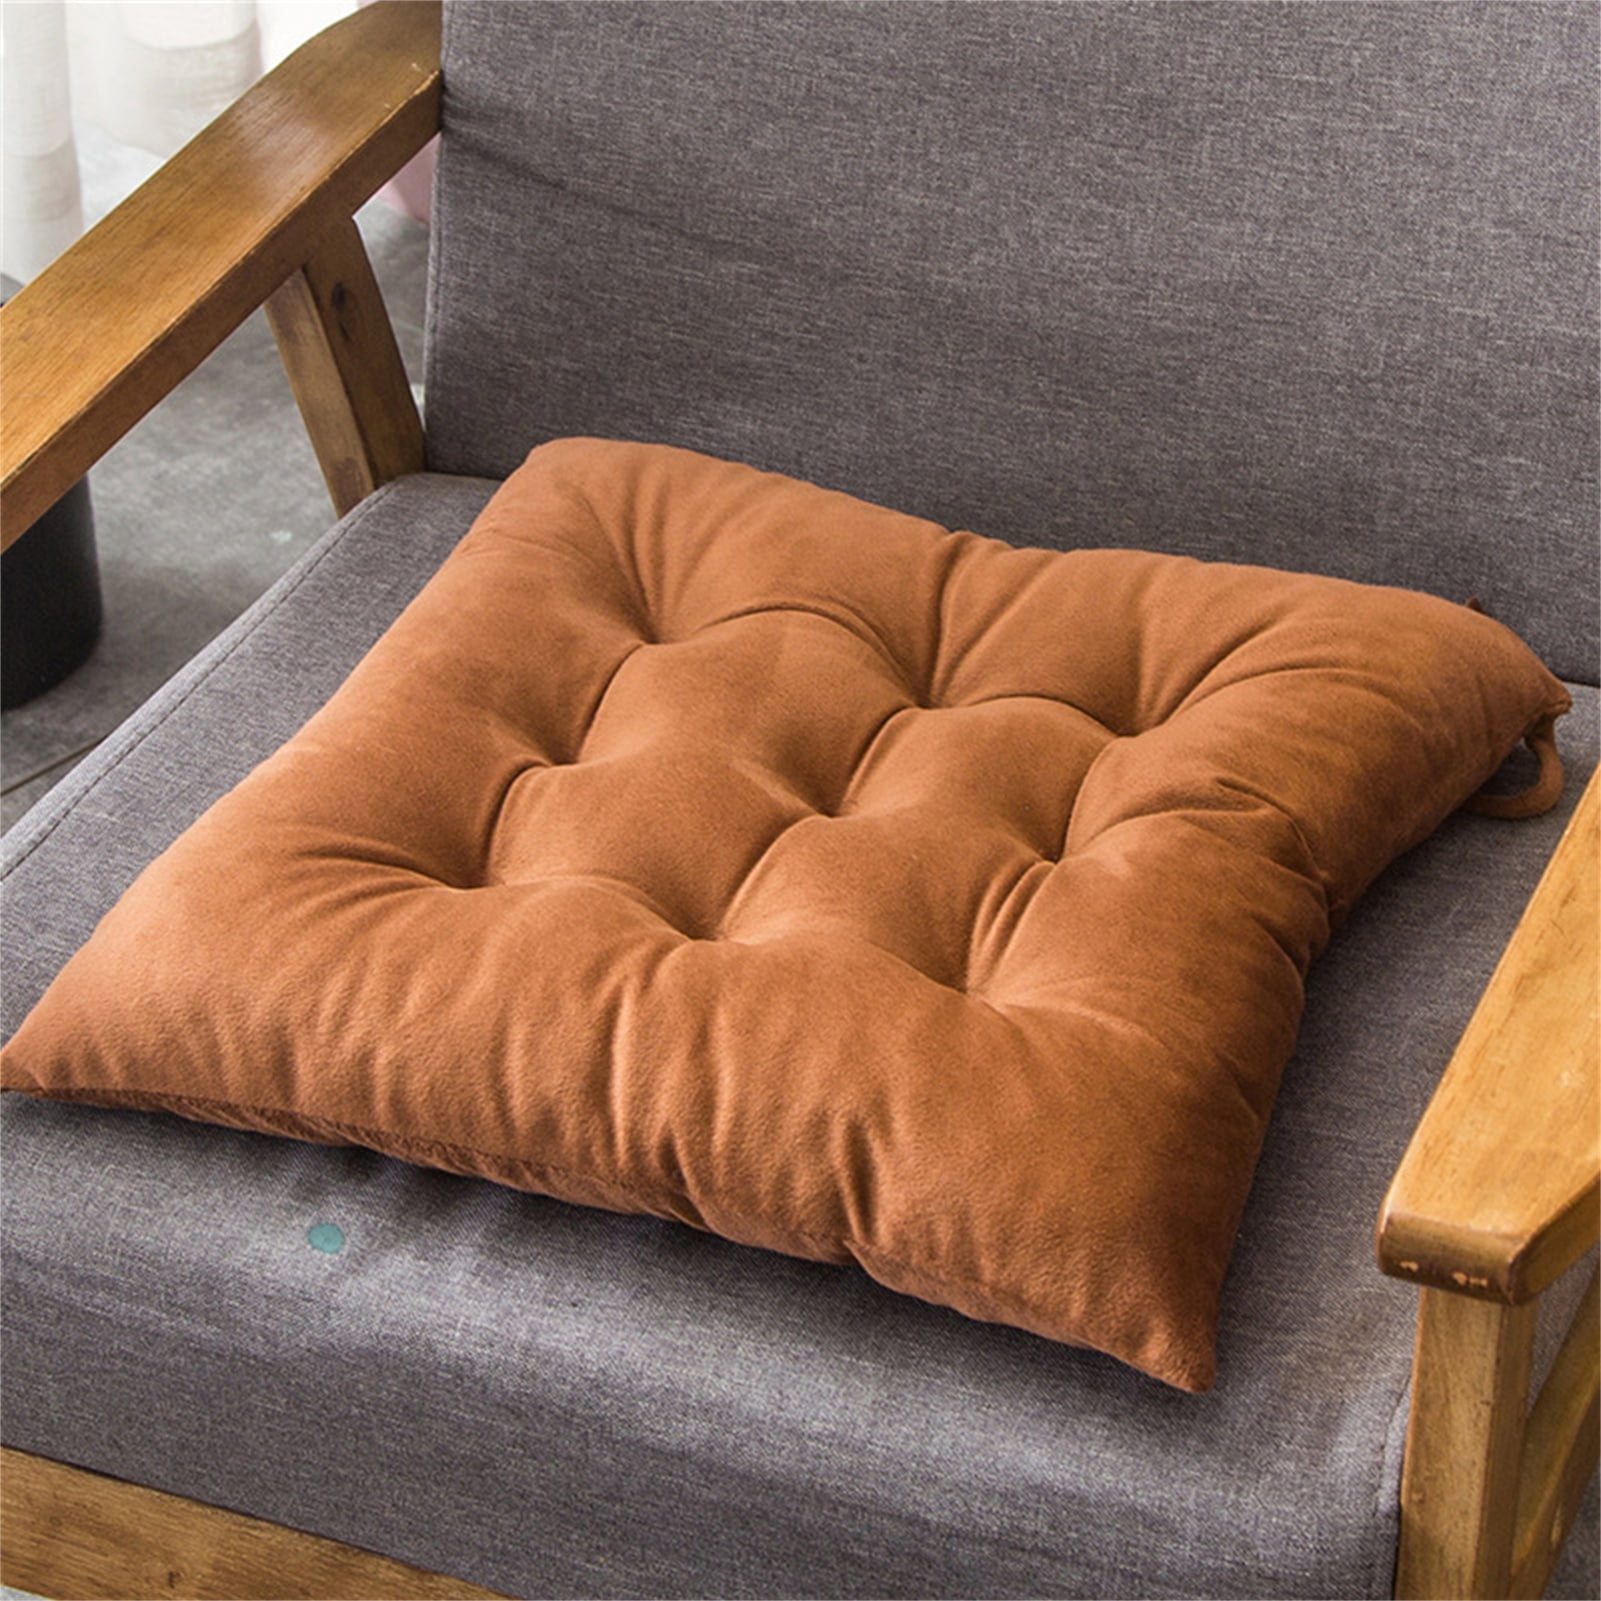 Hesroicy Chair Seat Cushion 15.7 Nonslip Soft Thick Square Plush